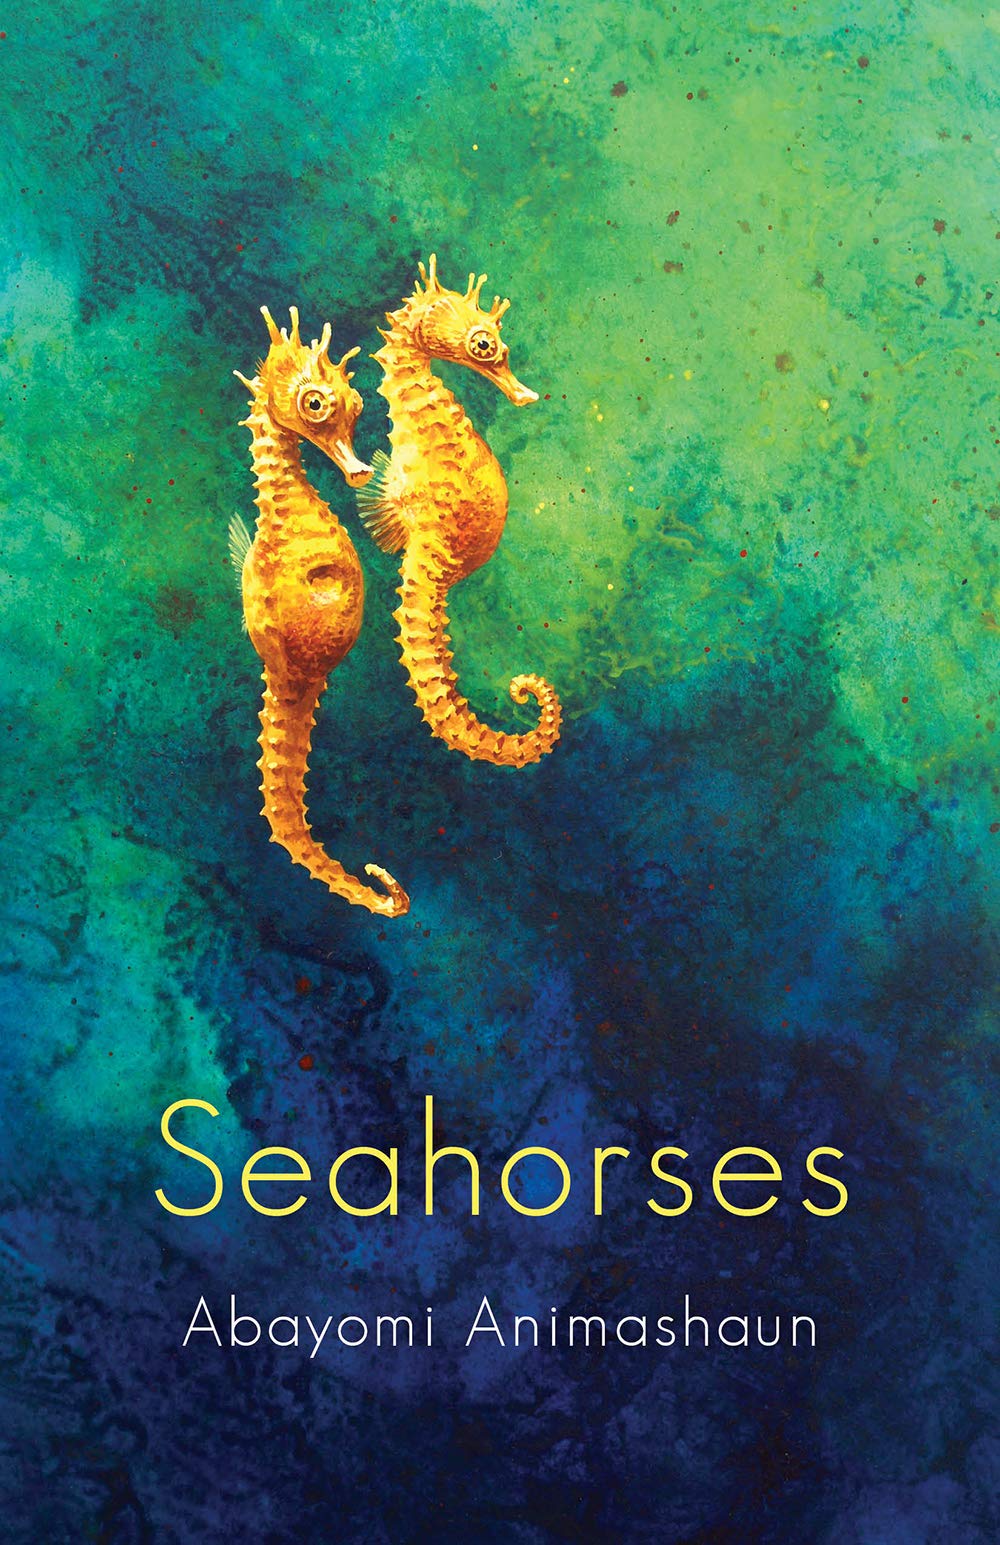 Seahorses ***